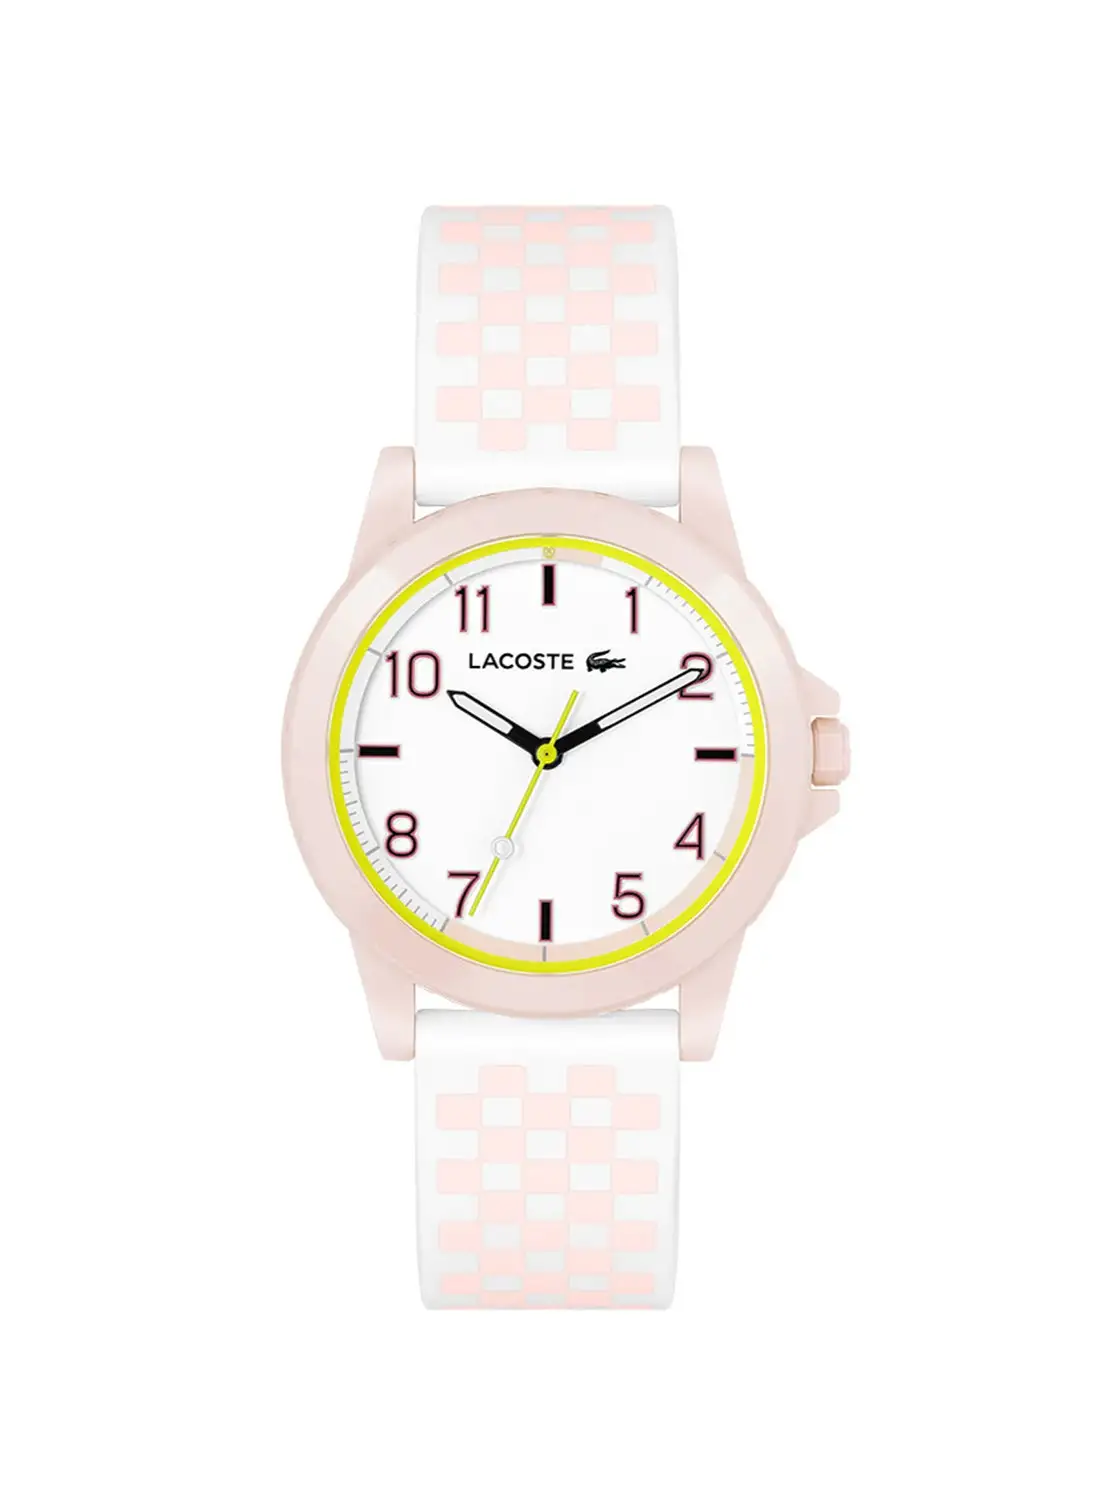 LACOSTE Unisex Analog Round Shape Silicone Wrist Watch 2020147 - 36 Mm